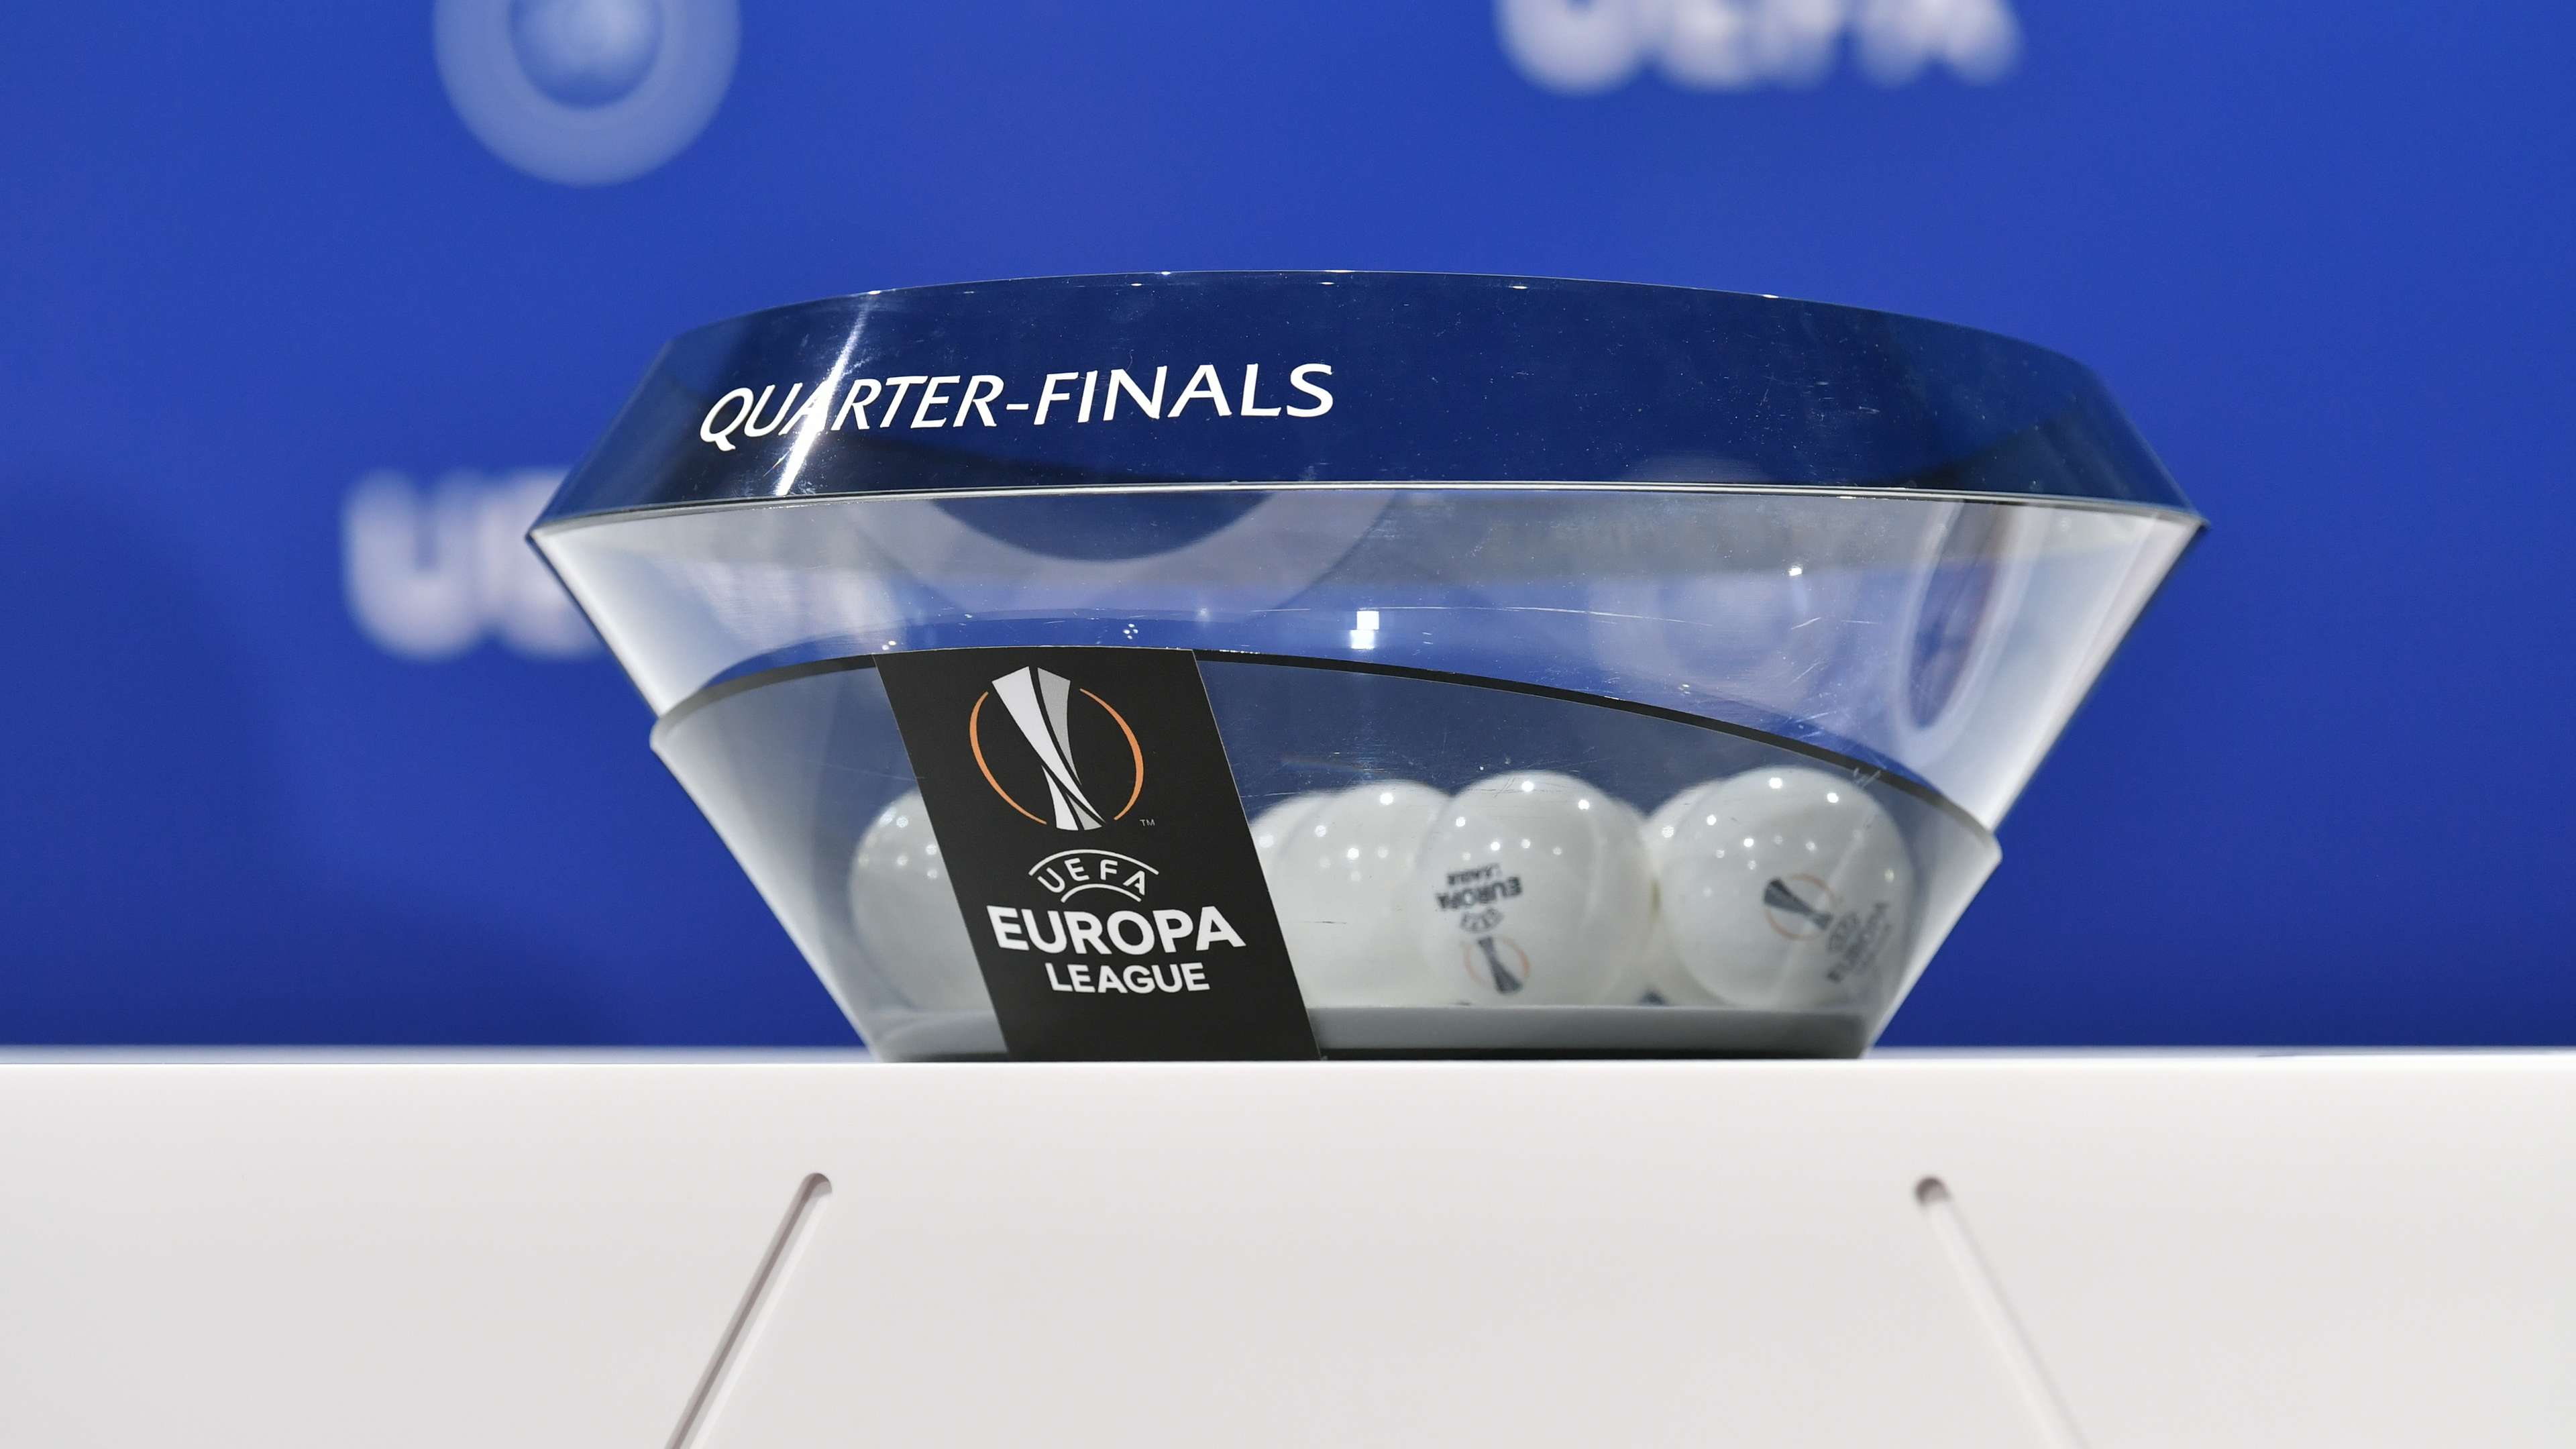 Europa League quarter finals draw